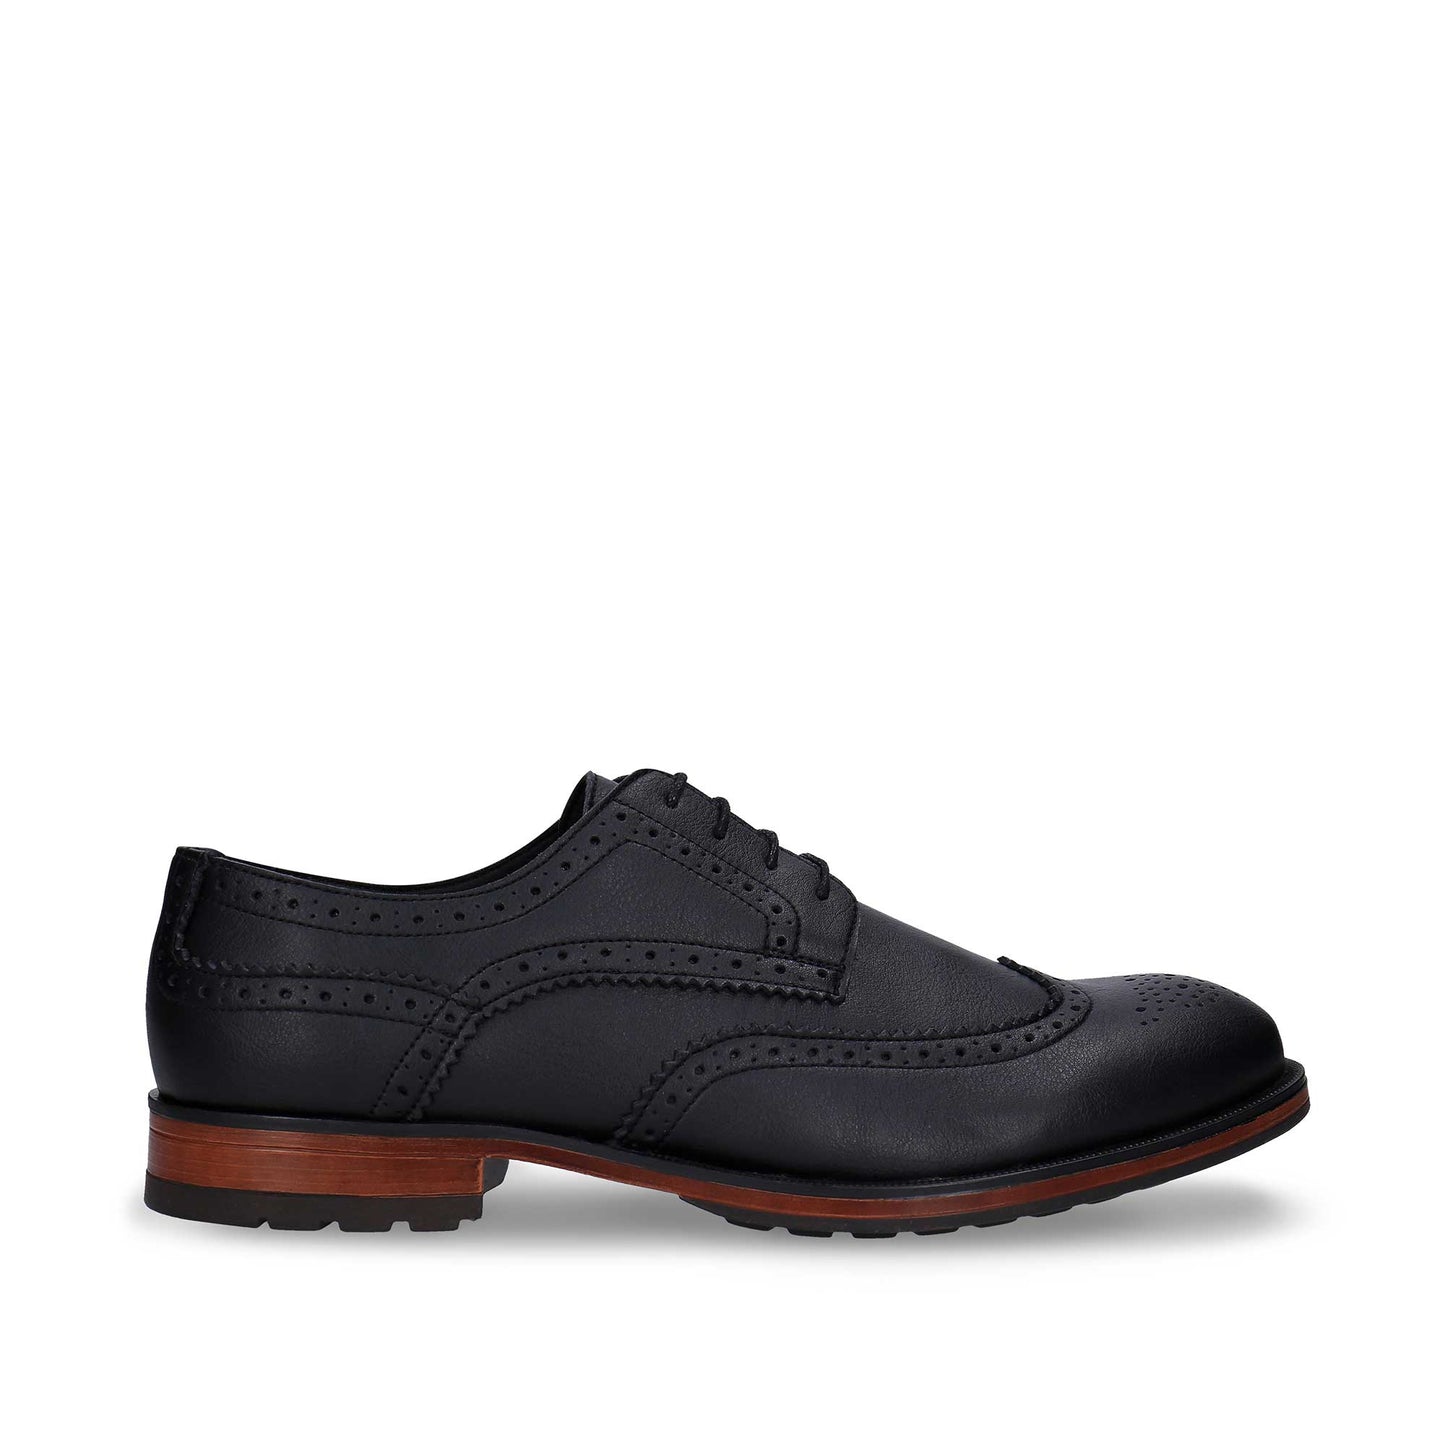 Siro Black dress shoes for men